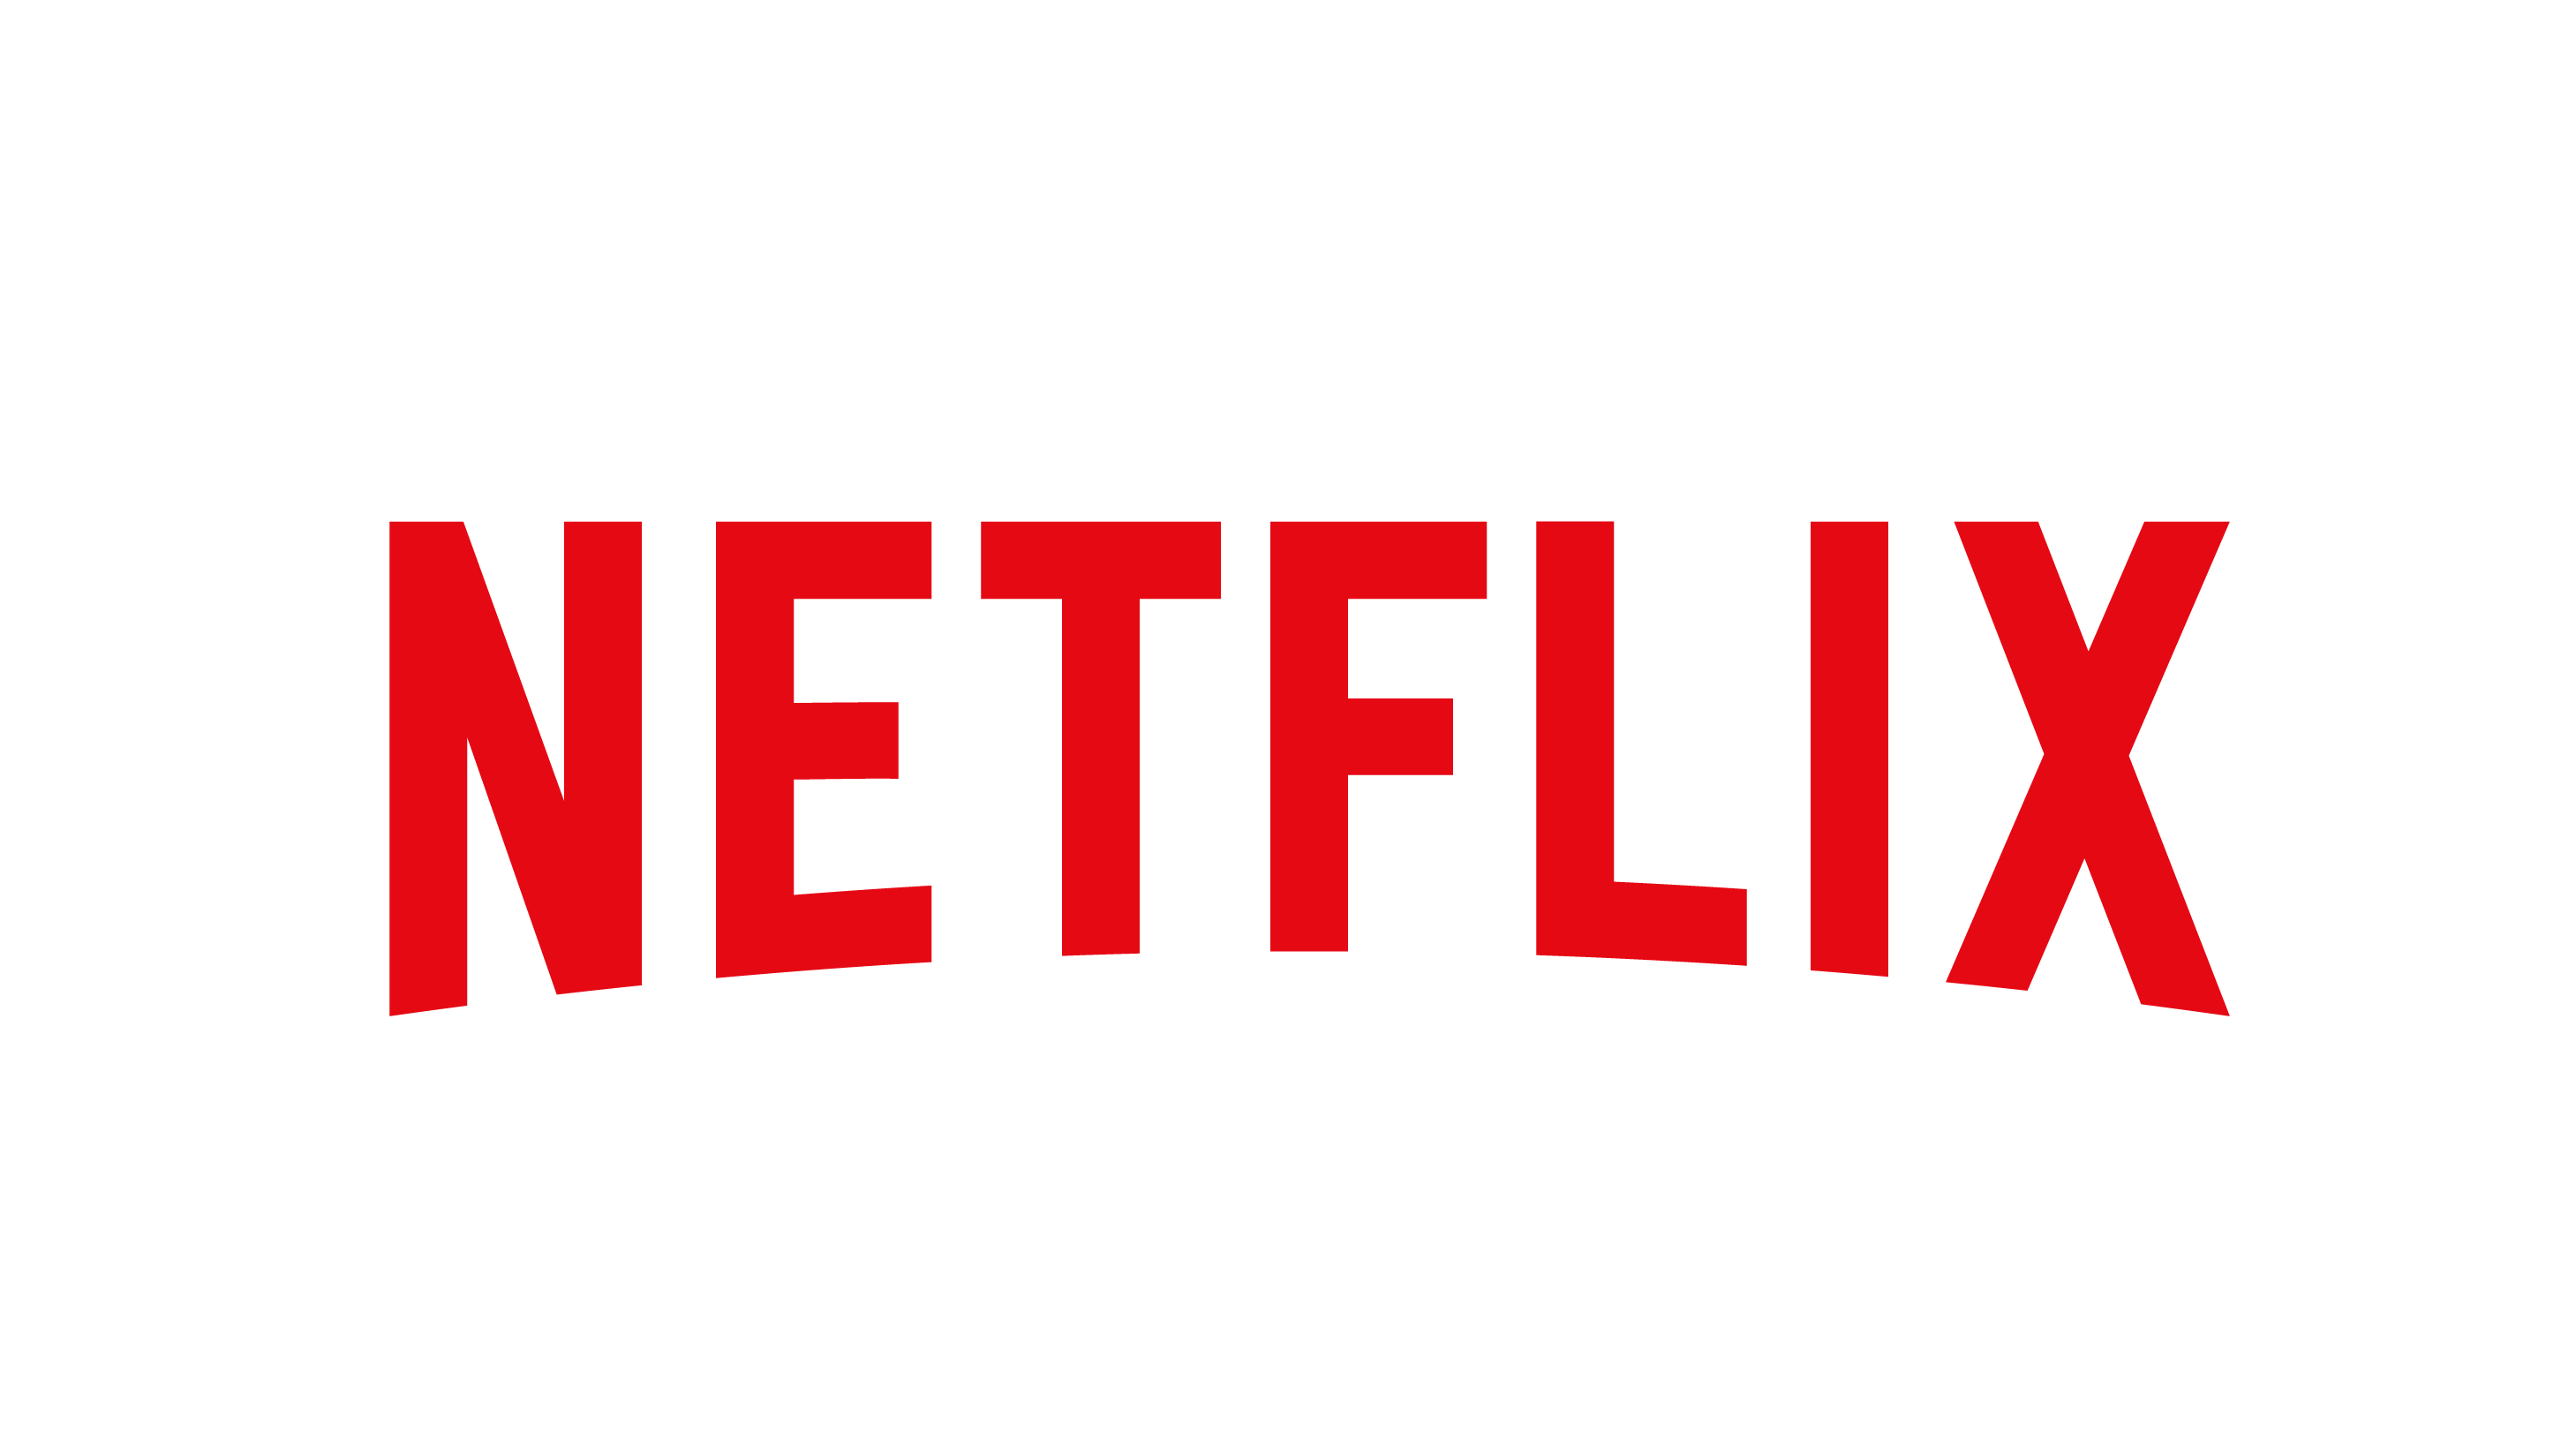 Netflix Logo PNG Image in High Definition